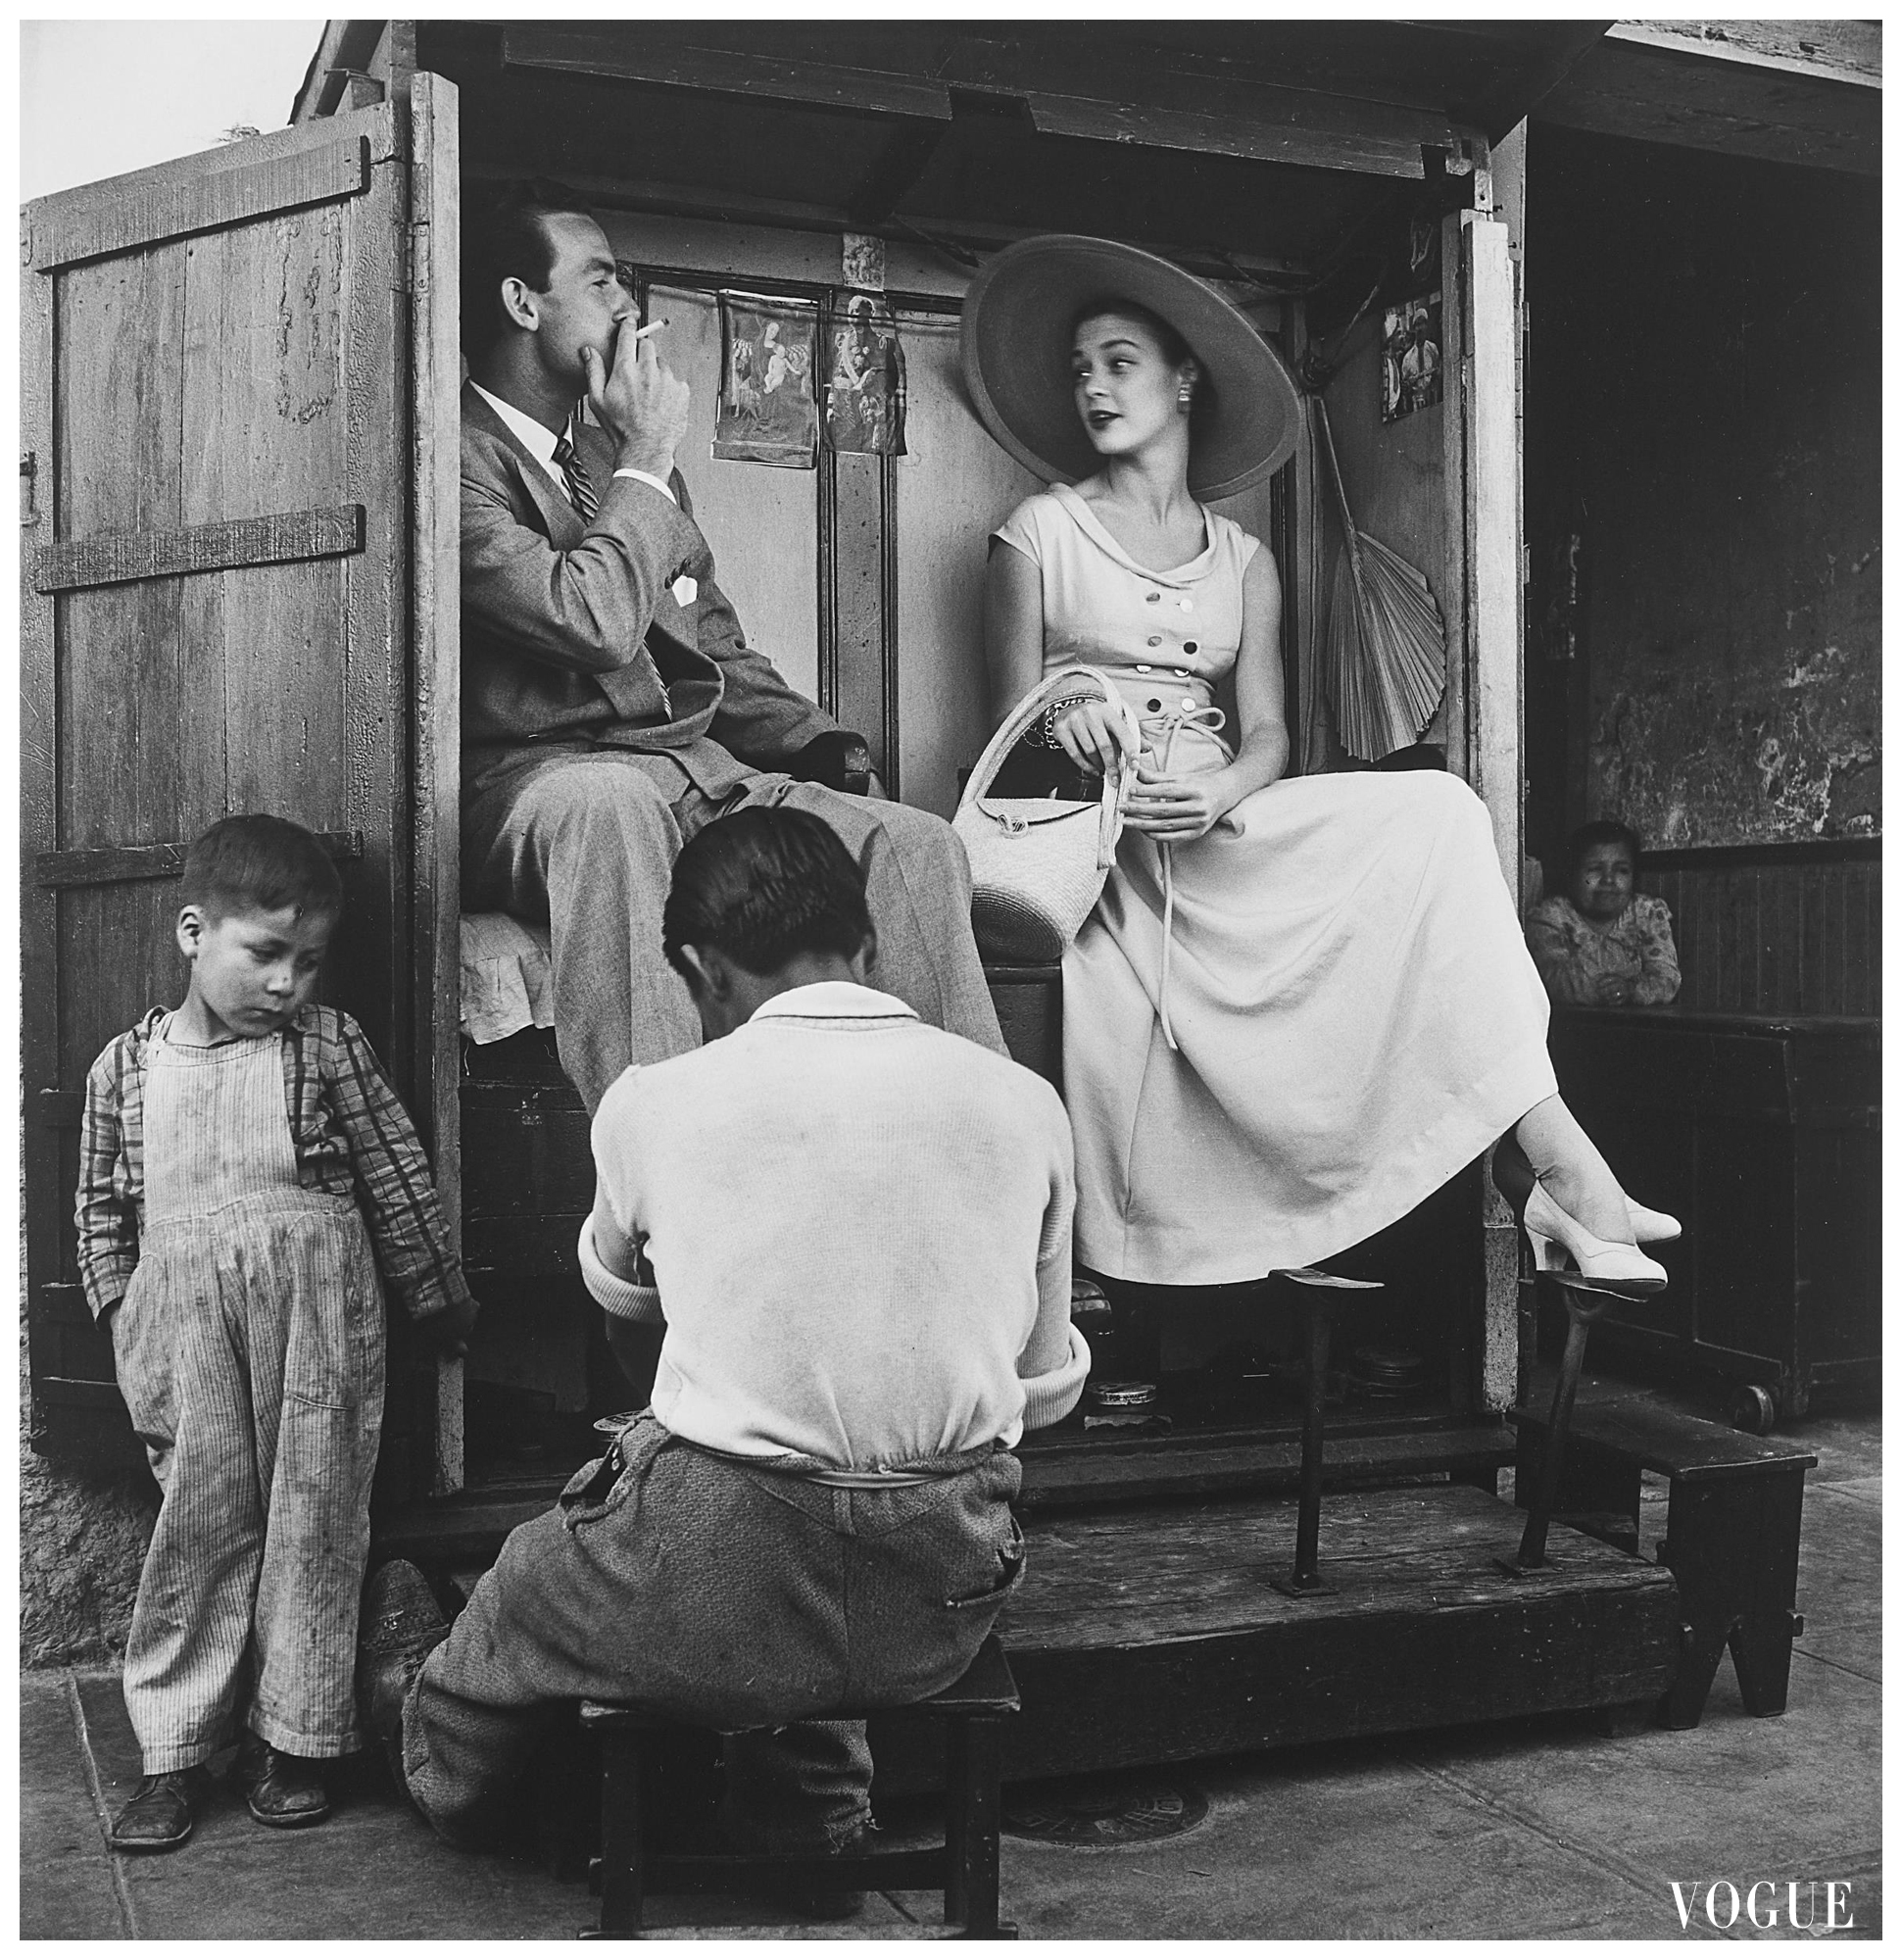 jean-patchett-vogue-fashion-photograph-in-lima-peru-1948-photo-irving-penn.jpeg